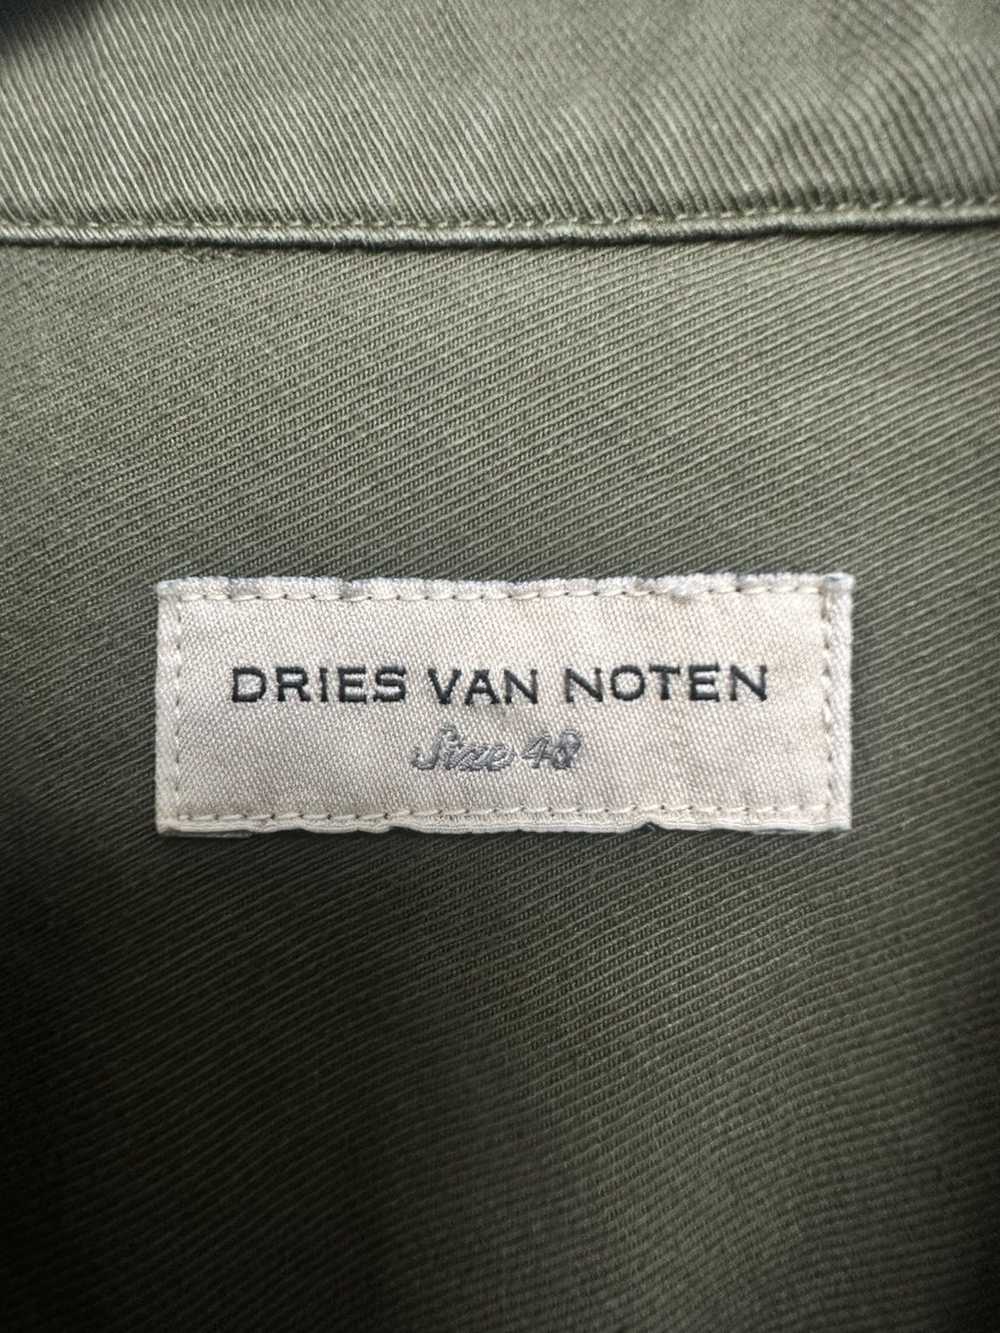 Dries Van Noten Khaki Green Button-Up Overshirt - image 3